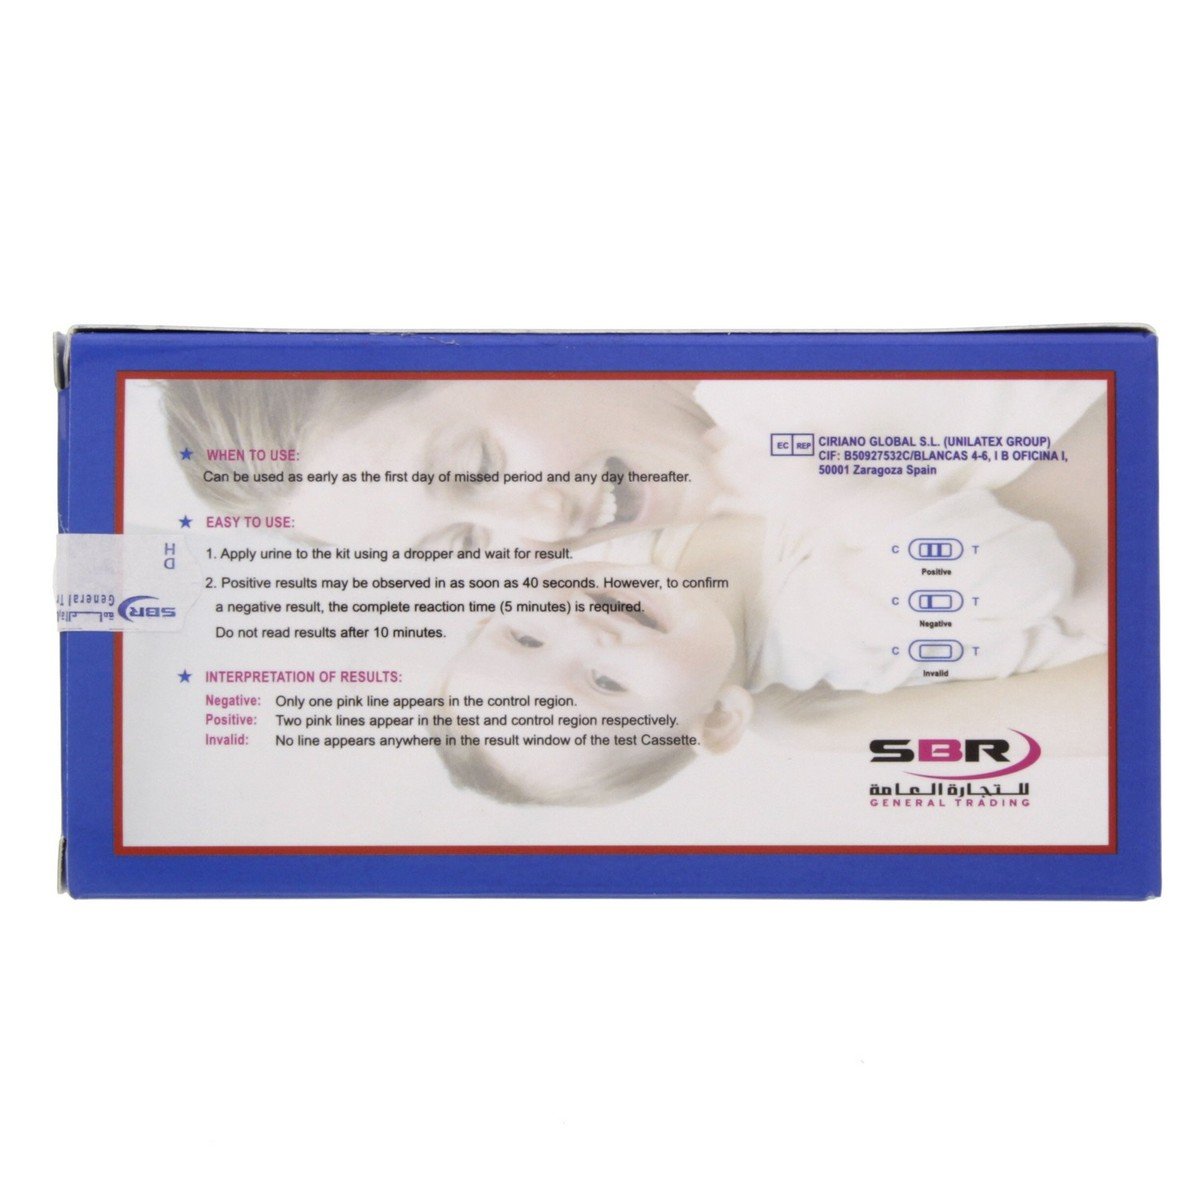 Super Test One step Pregnancy Test Kit